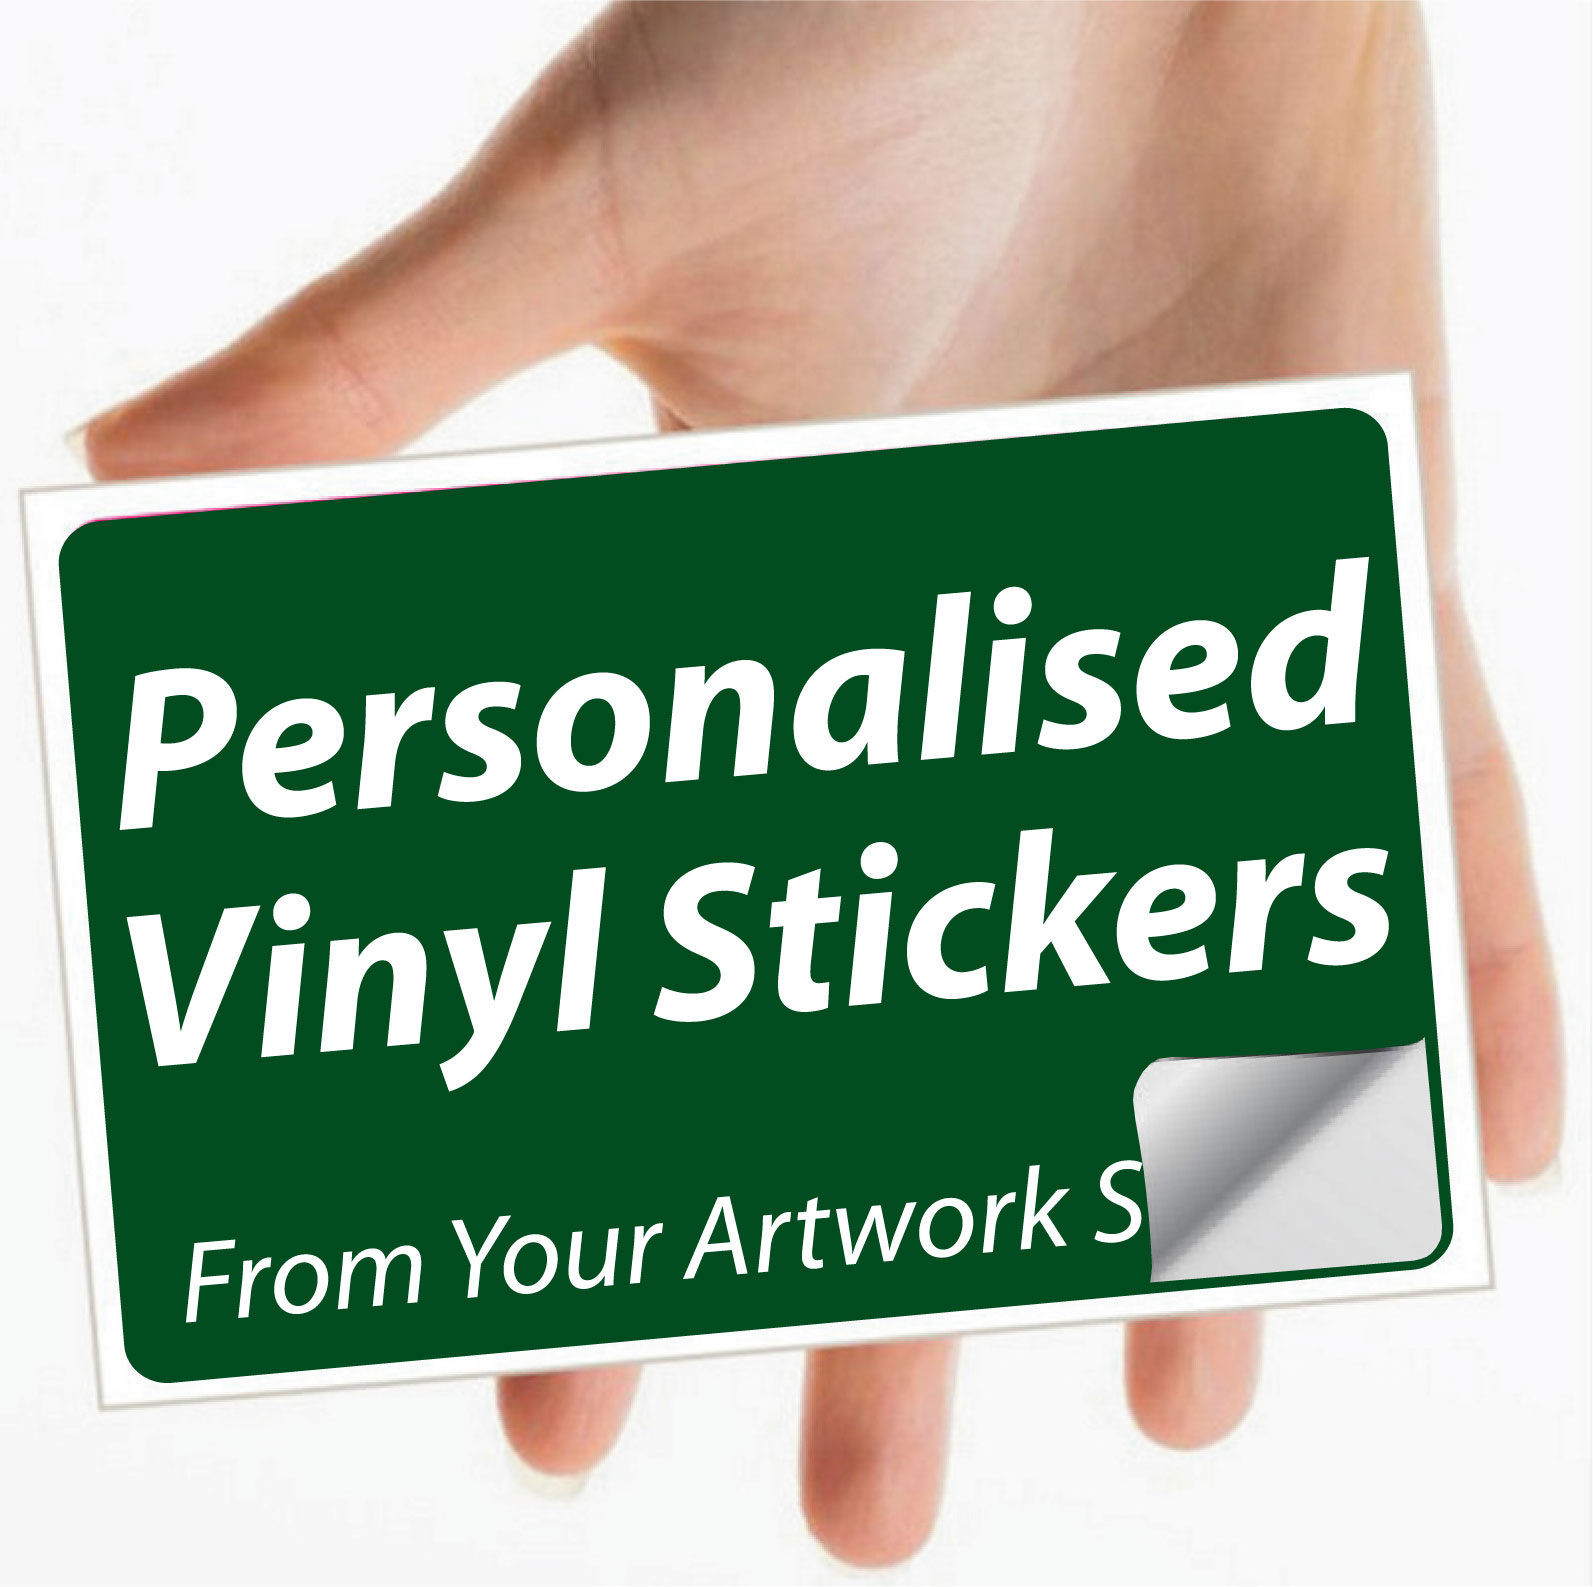 Personalised vinyl stickers UK